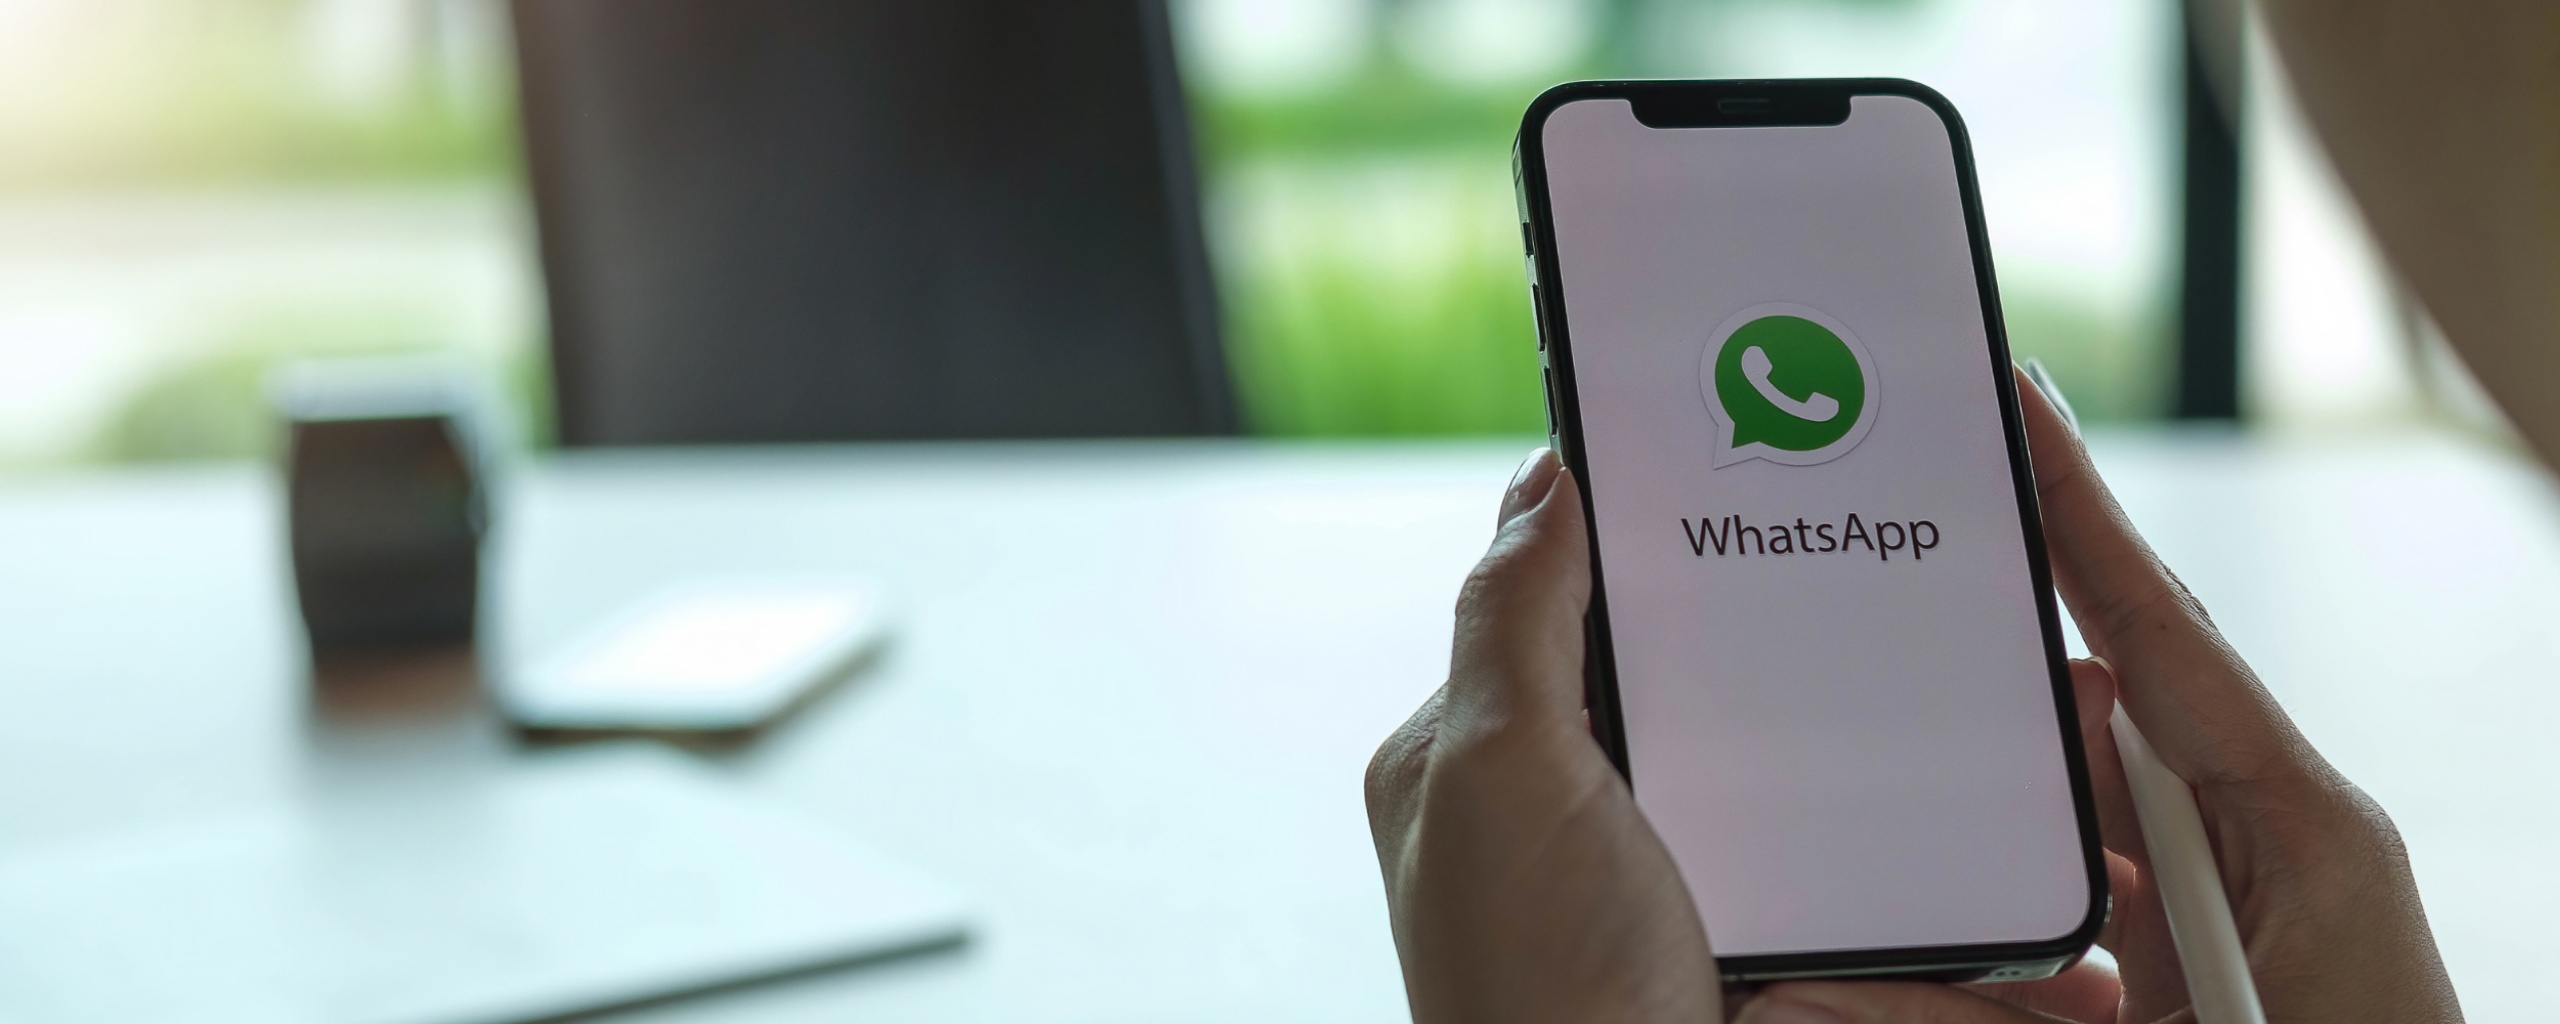 WhatsApp Proactive Messaging